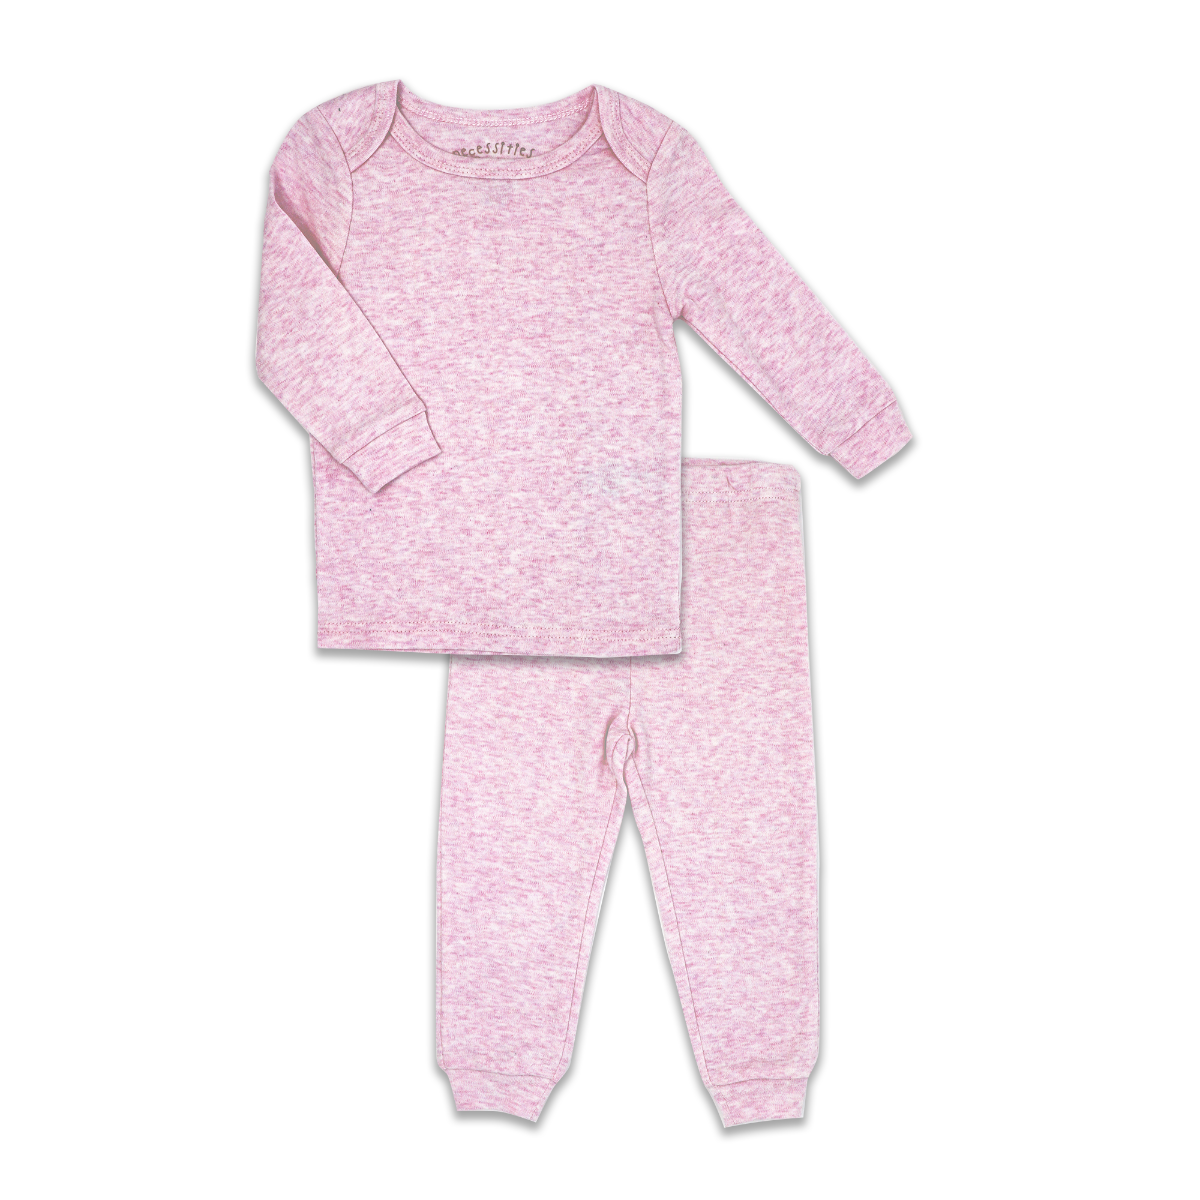 Toddler Solid Heather Pajamas Set - ittybittybubba